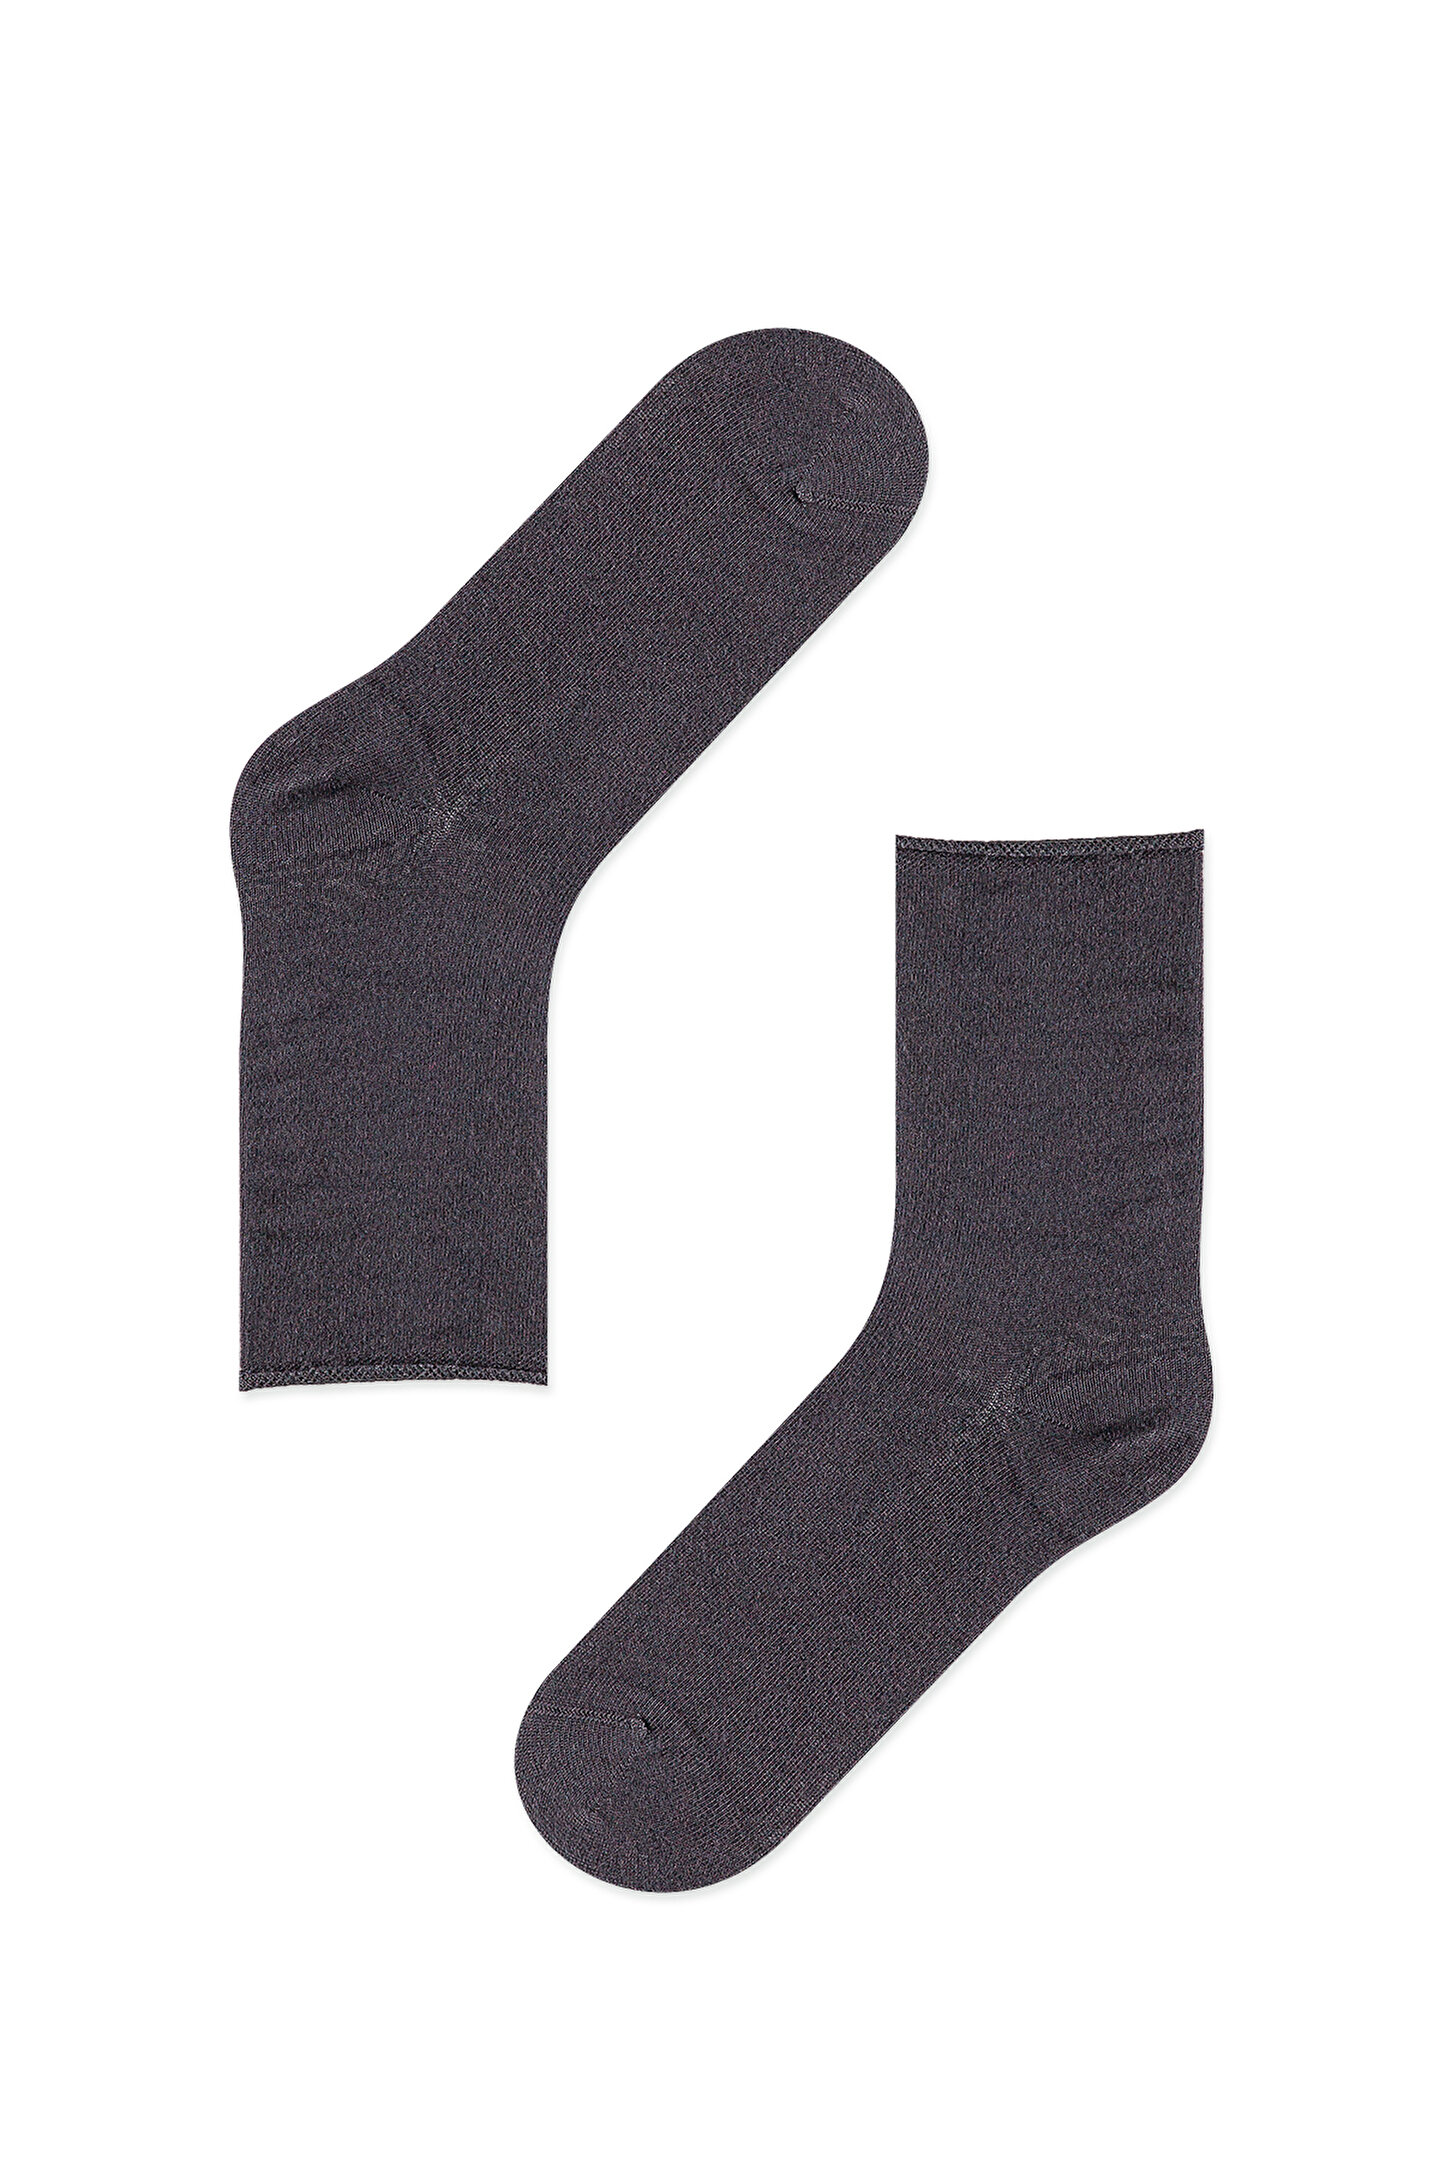 Soft Soket Çorap - 2li paket - 1